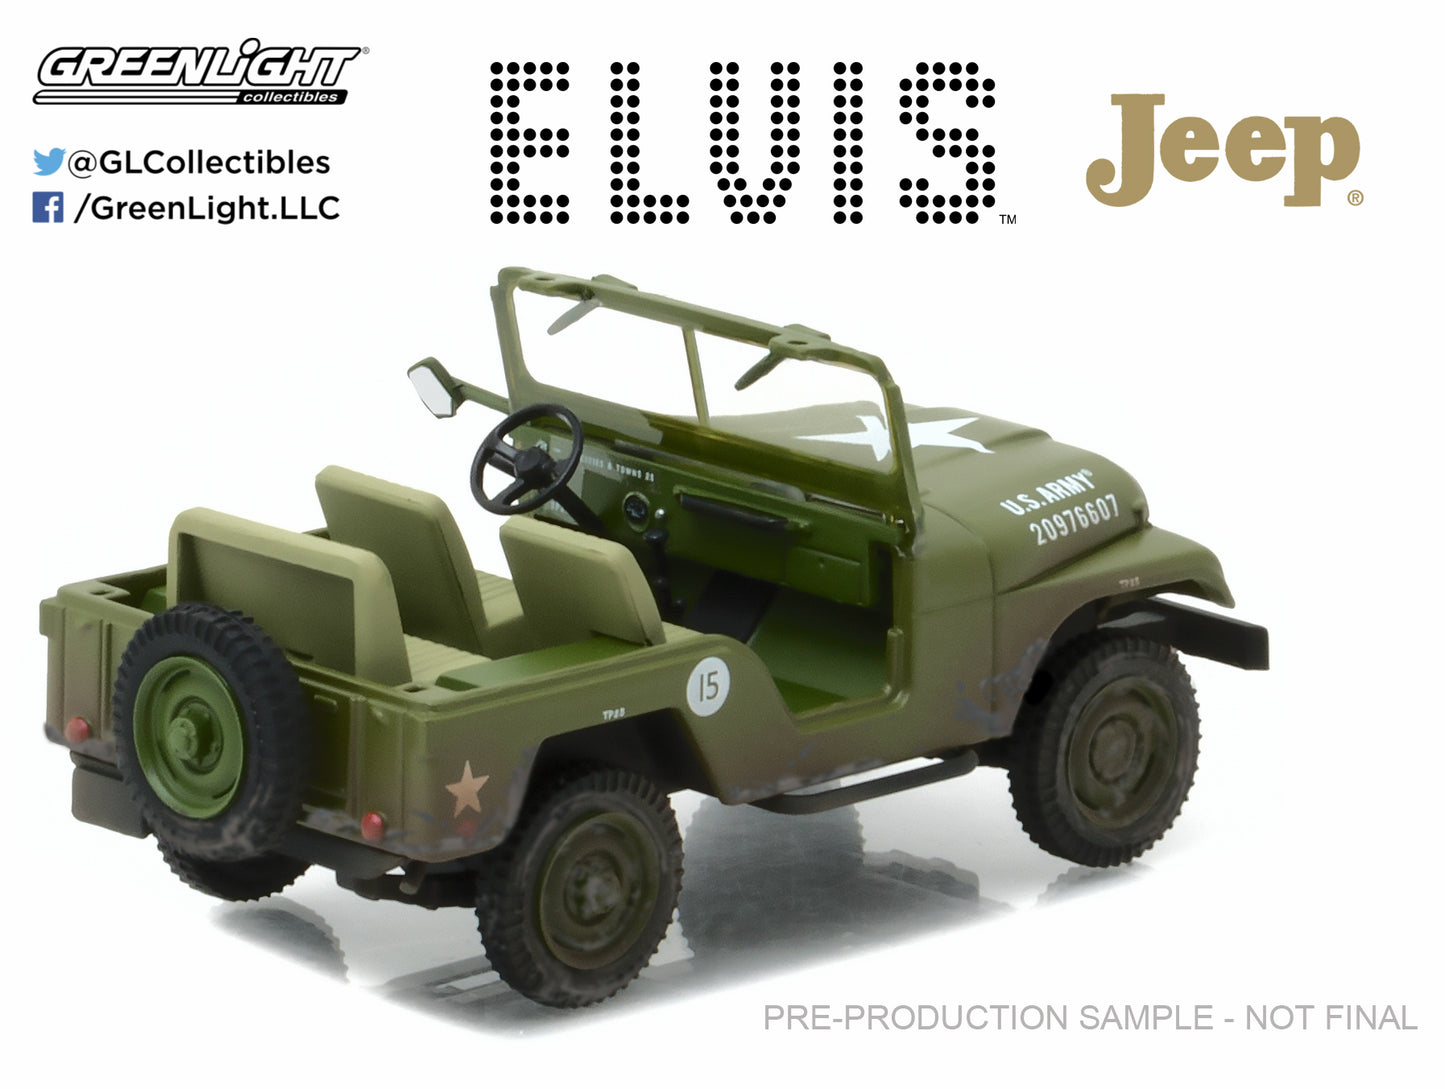 GreenLight 1:43 Elvis Presley (1935-77) - Cold War Era Willys Army Jeep 86311